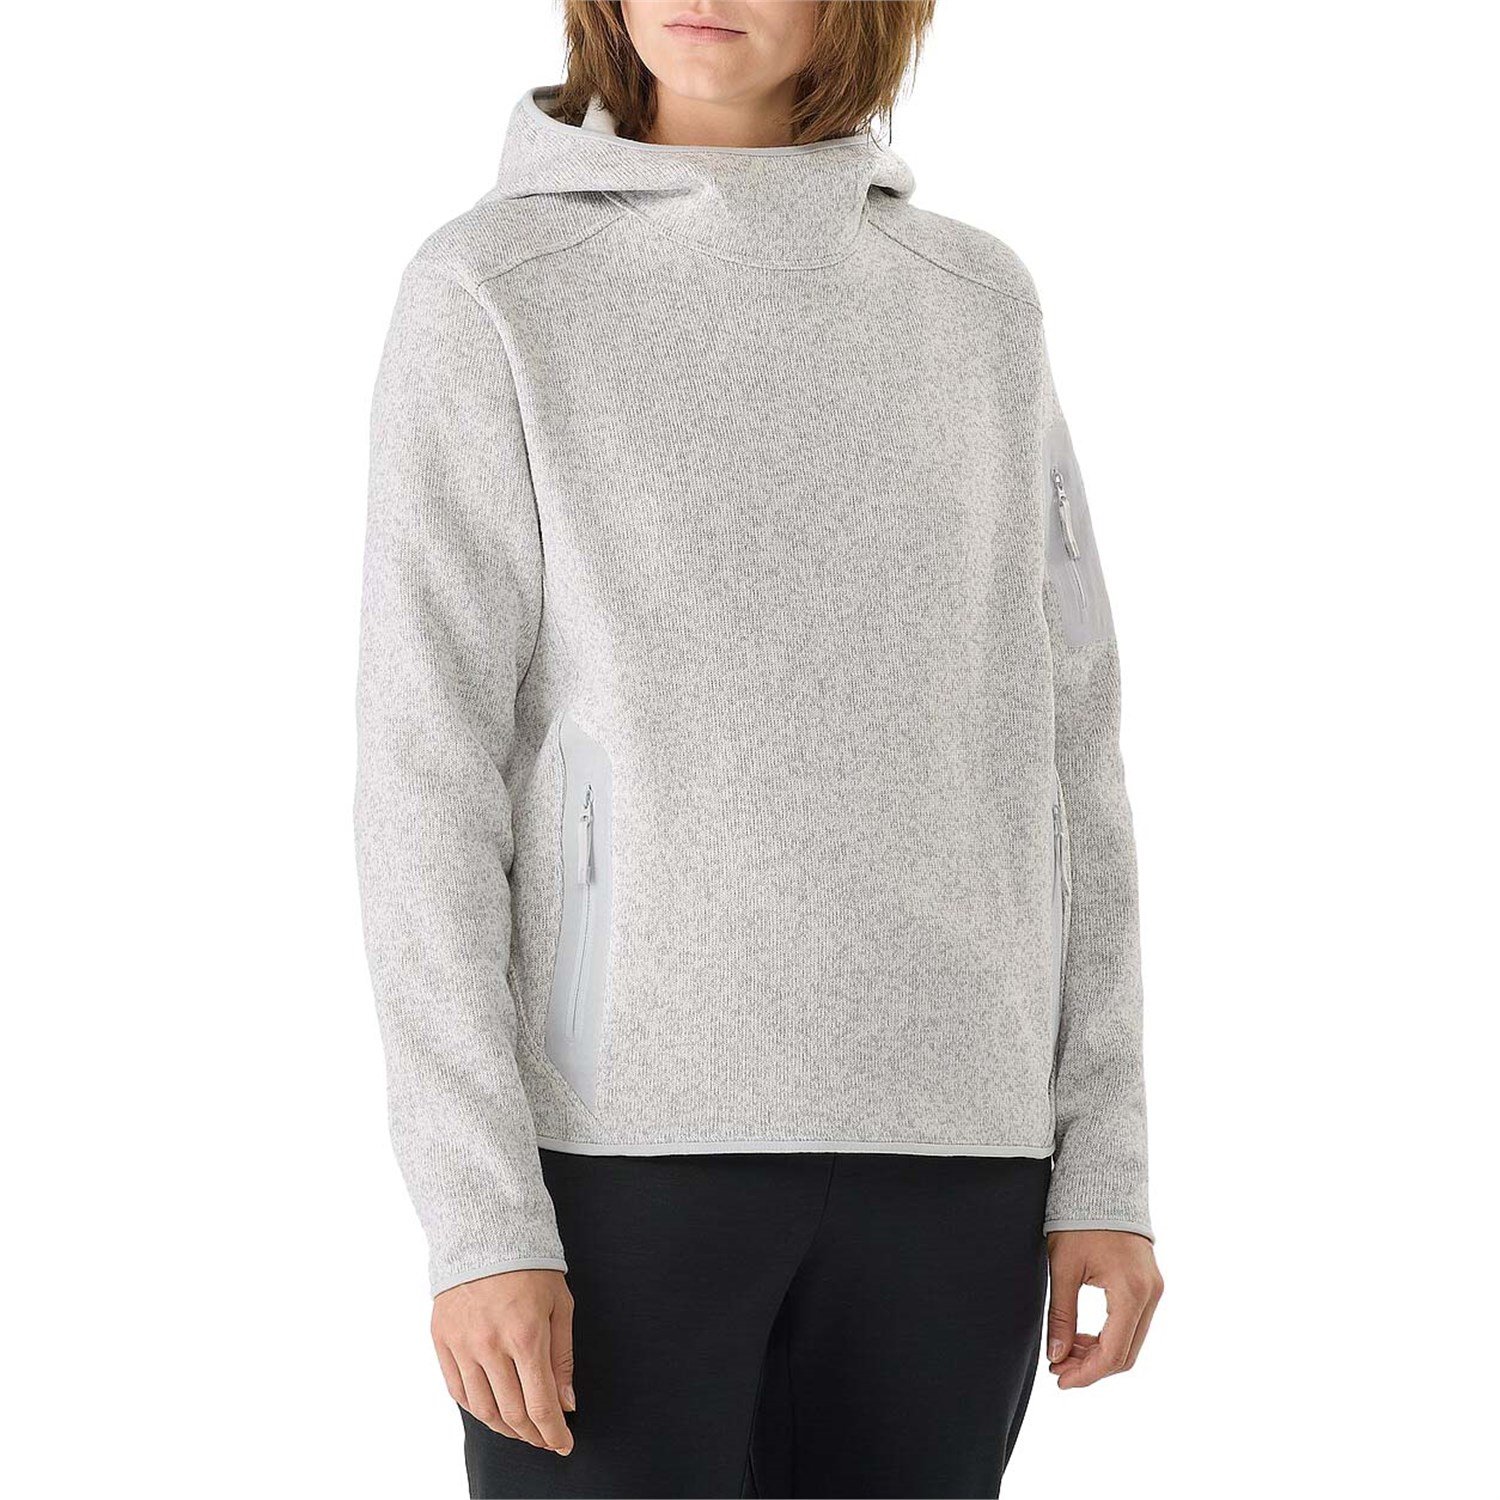 Толстовка Arc'teryx Covert с капюшоном, серый comfortable sweatshirt drawstring winter autumn casual handsome pullover hoodie men hoodie hoodie